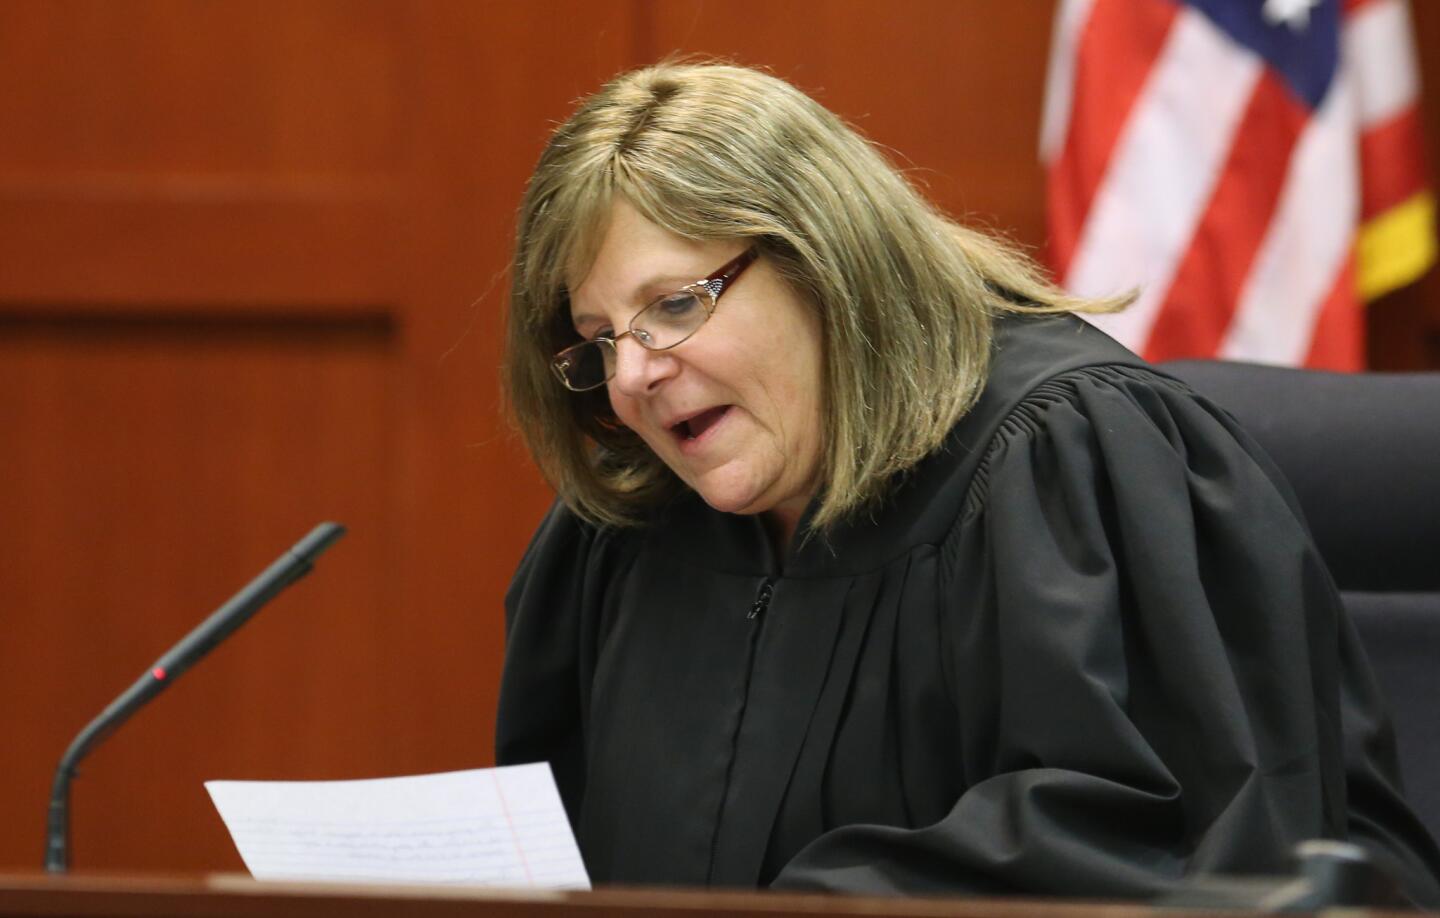 George Zimmerman Trial Day 24